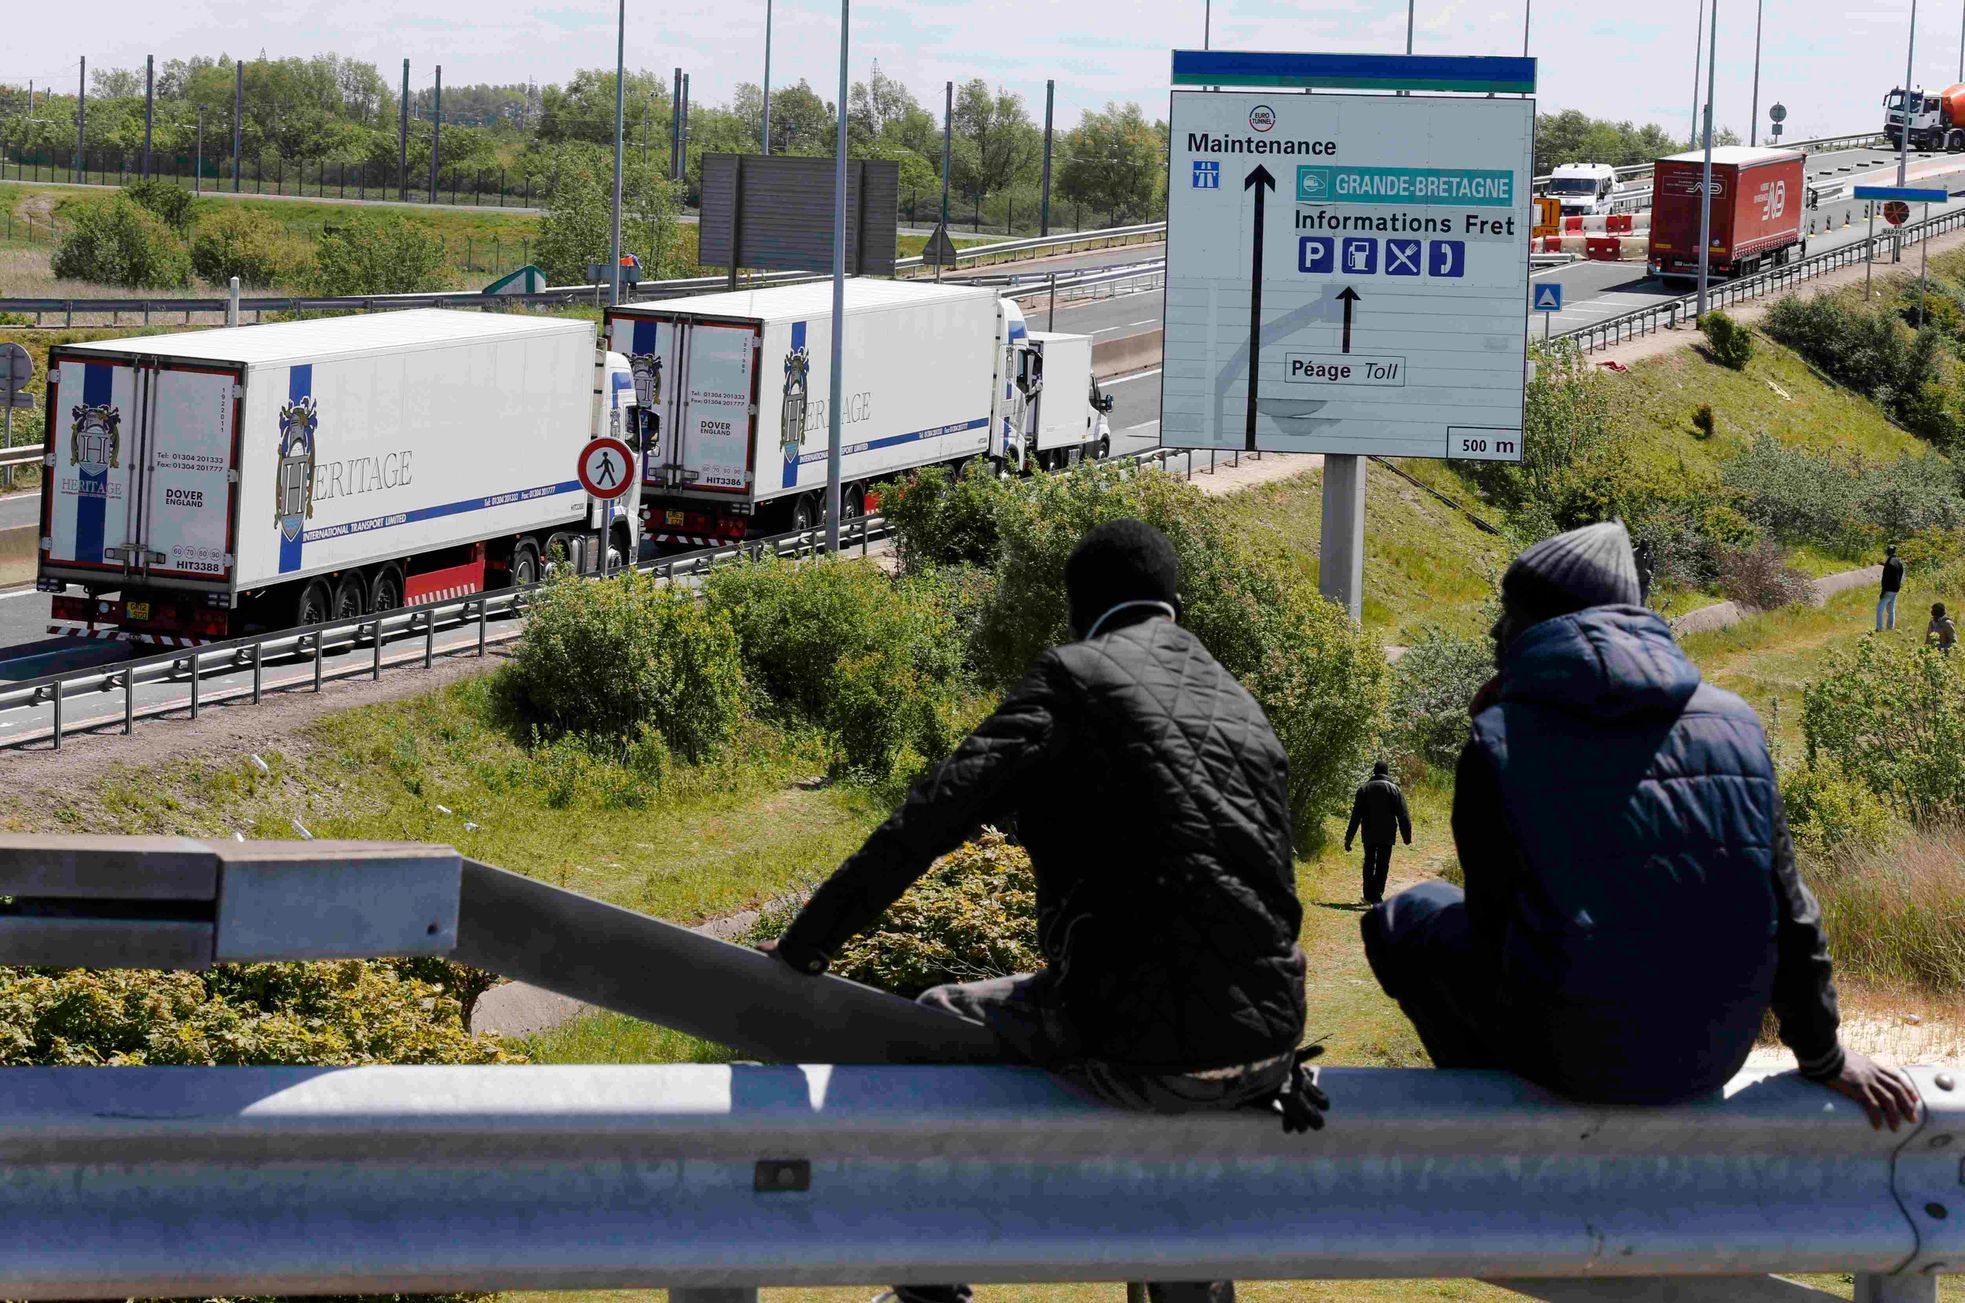 Francie - Cesta do Evropy - uprchlíci - Calais